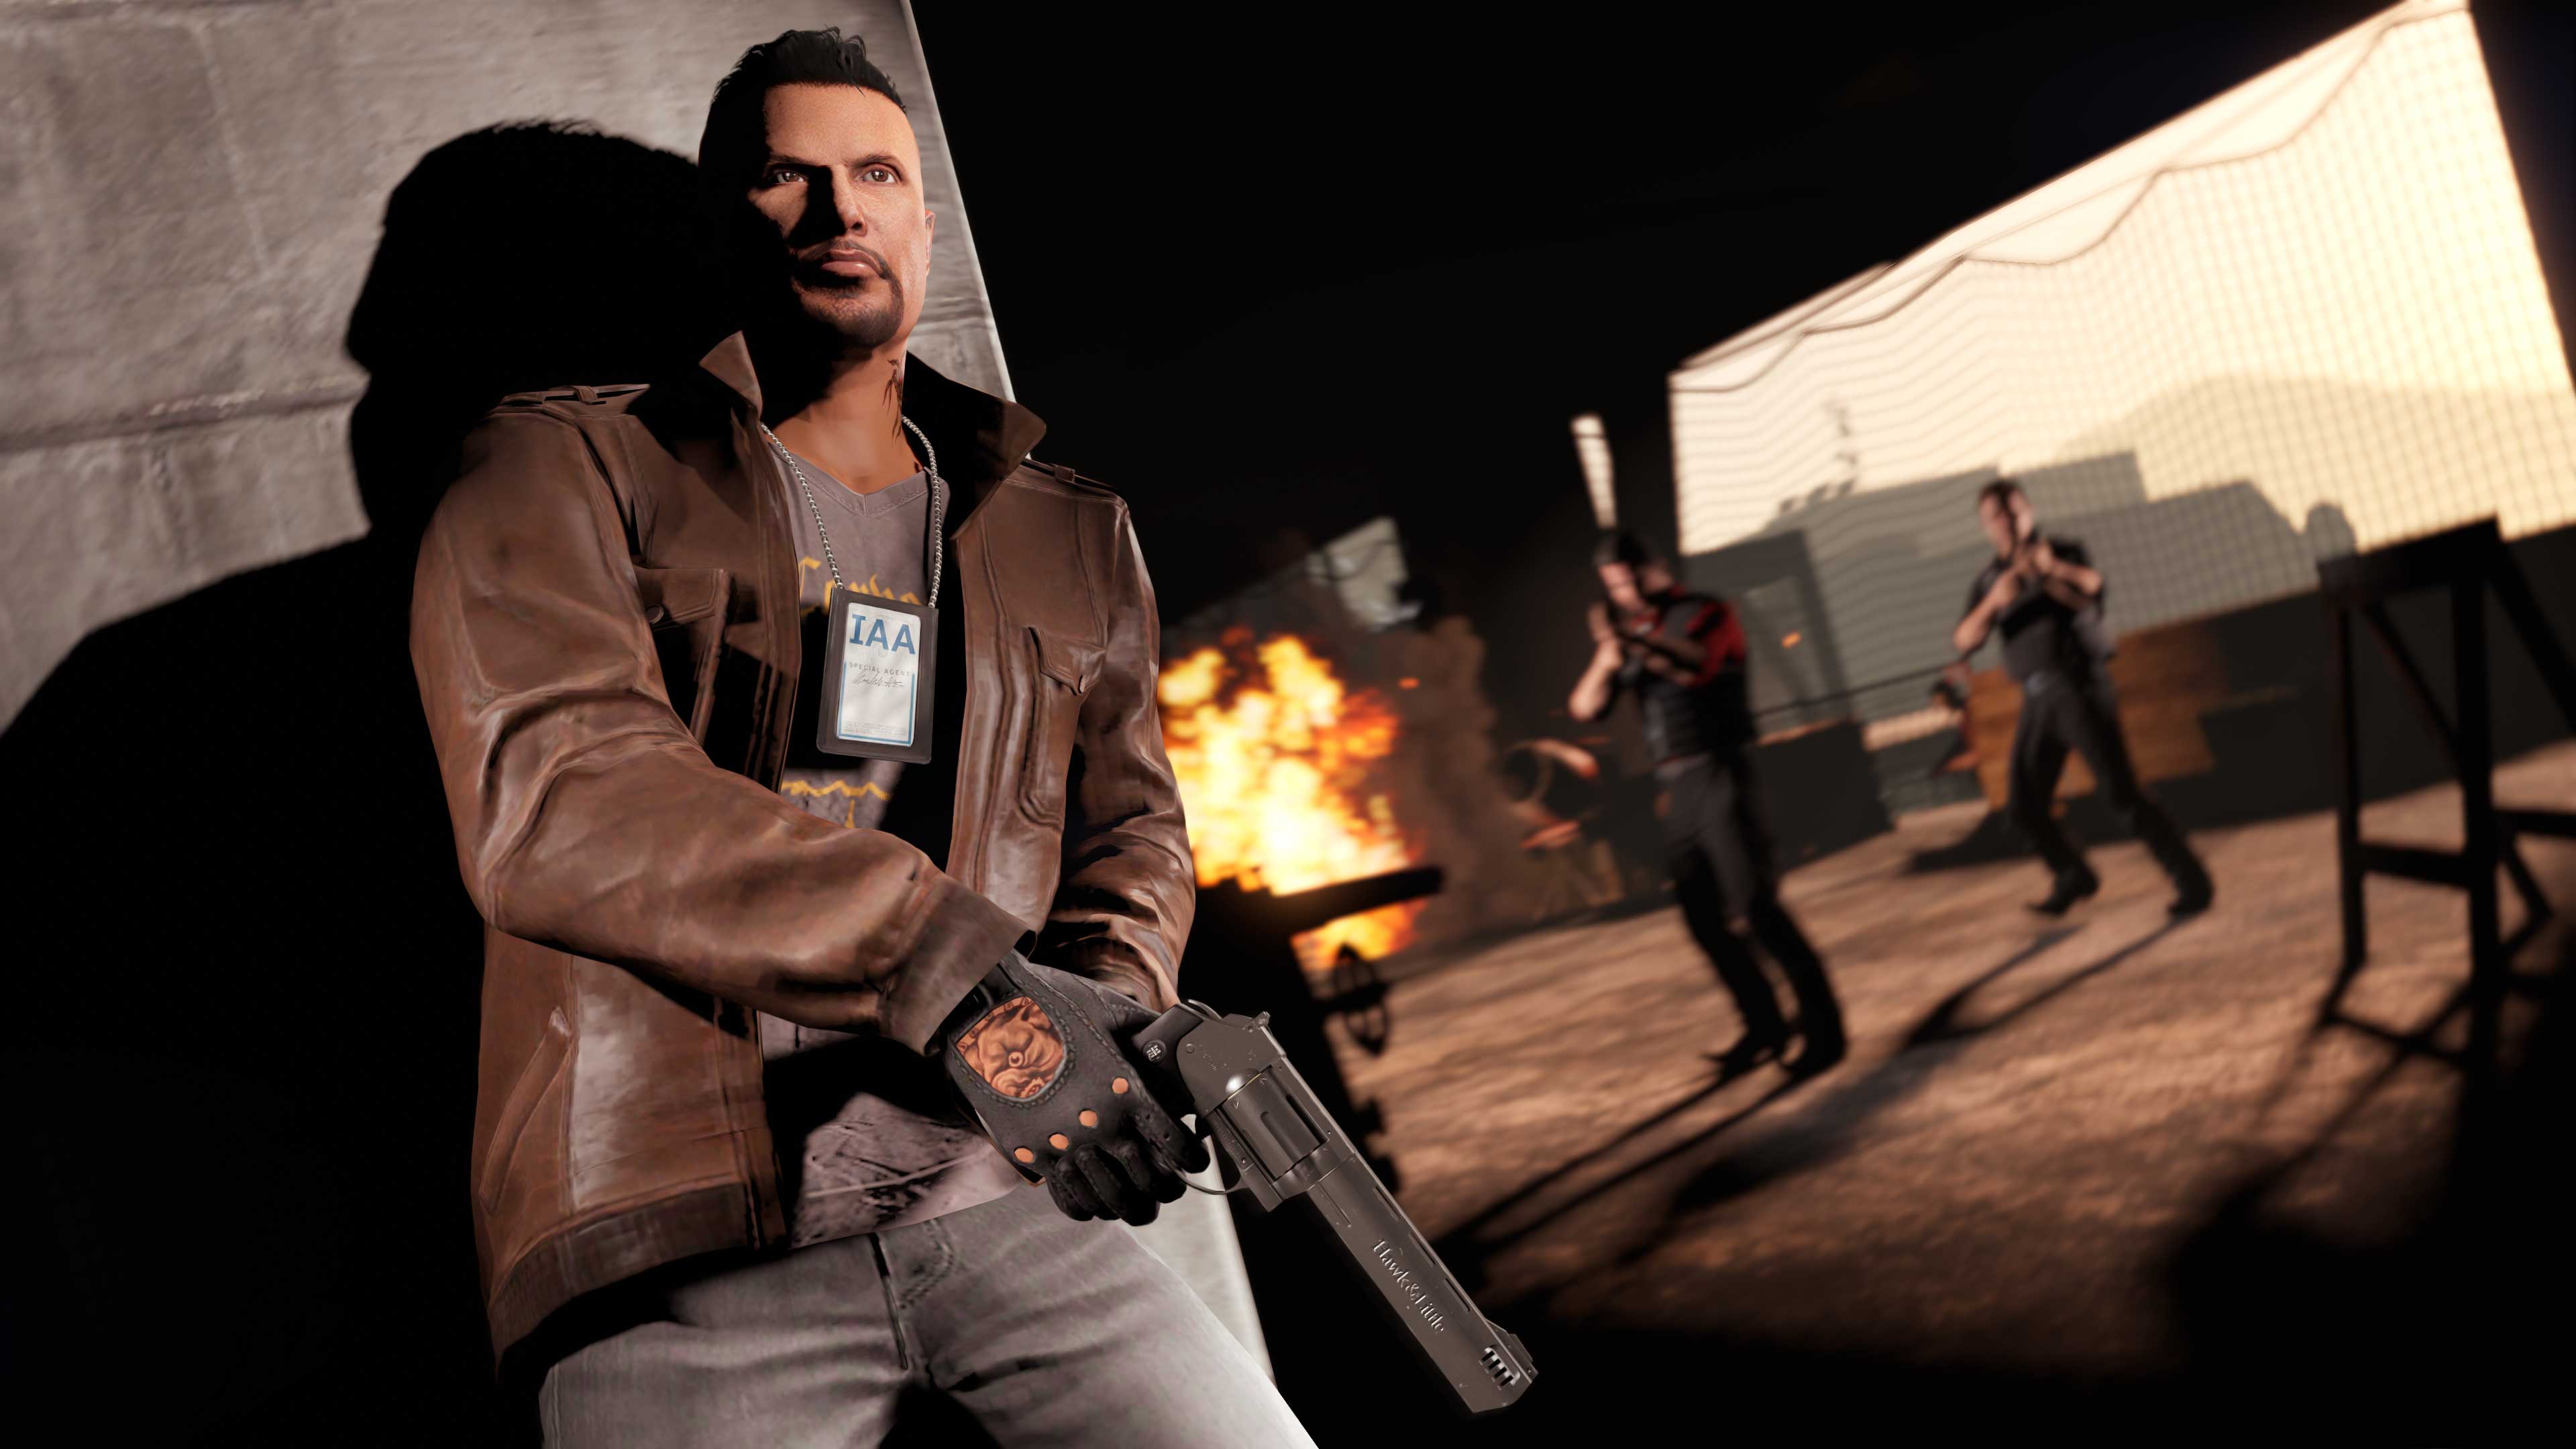 Grand Theft Auto Online - The Criminal Enterprises, Coming July 26 - Rockstar  Games